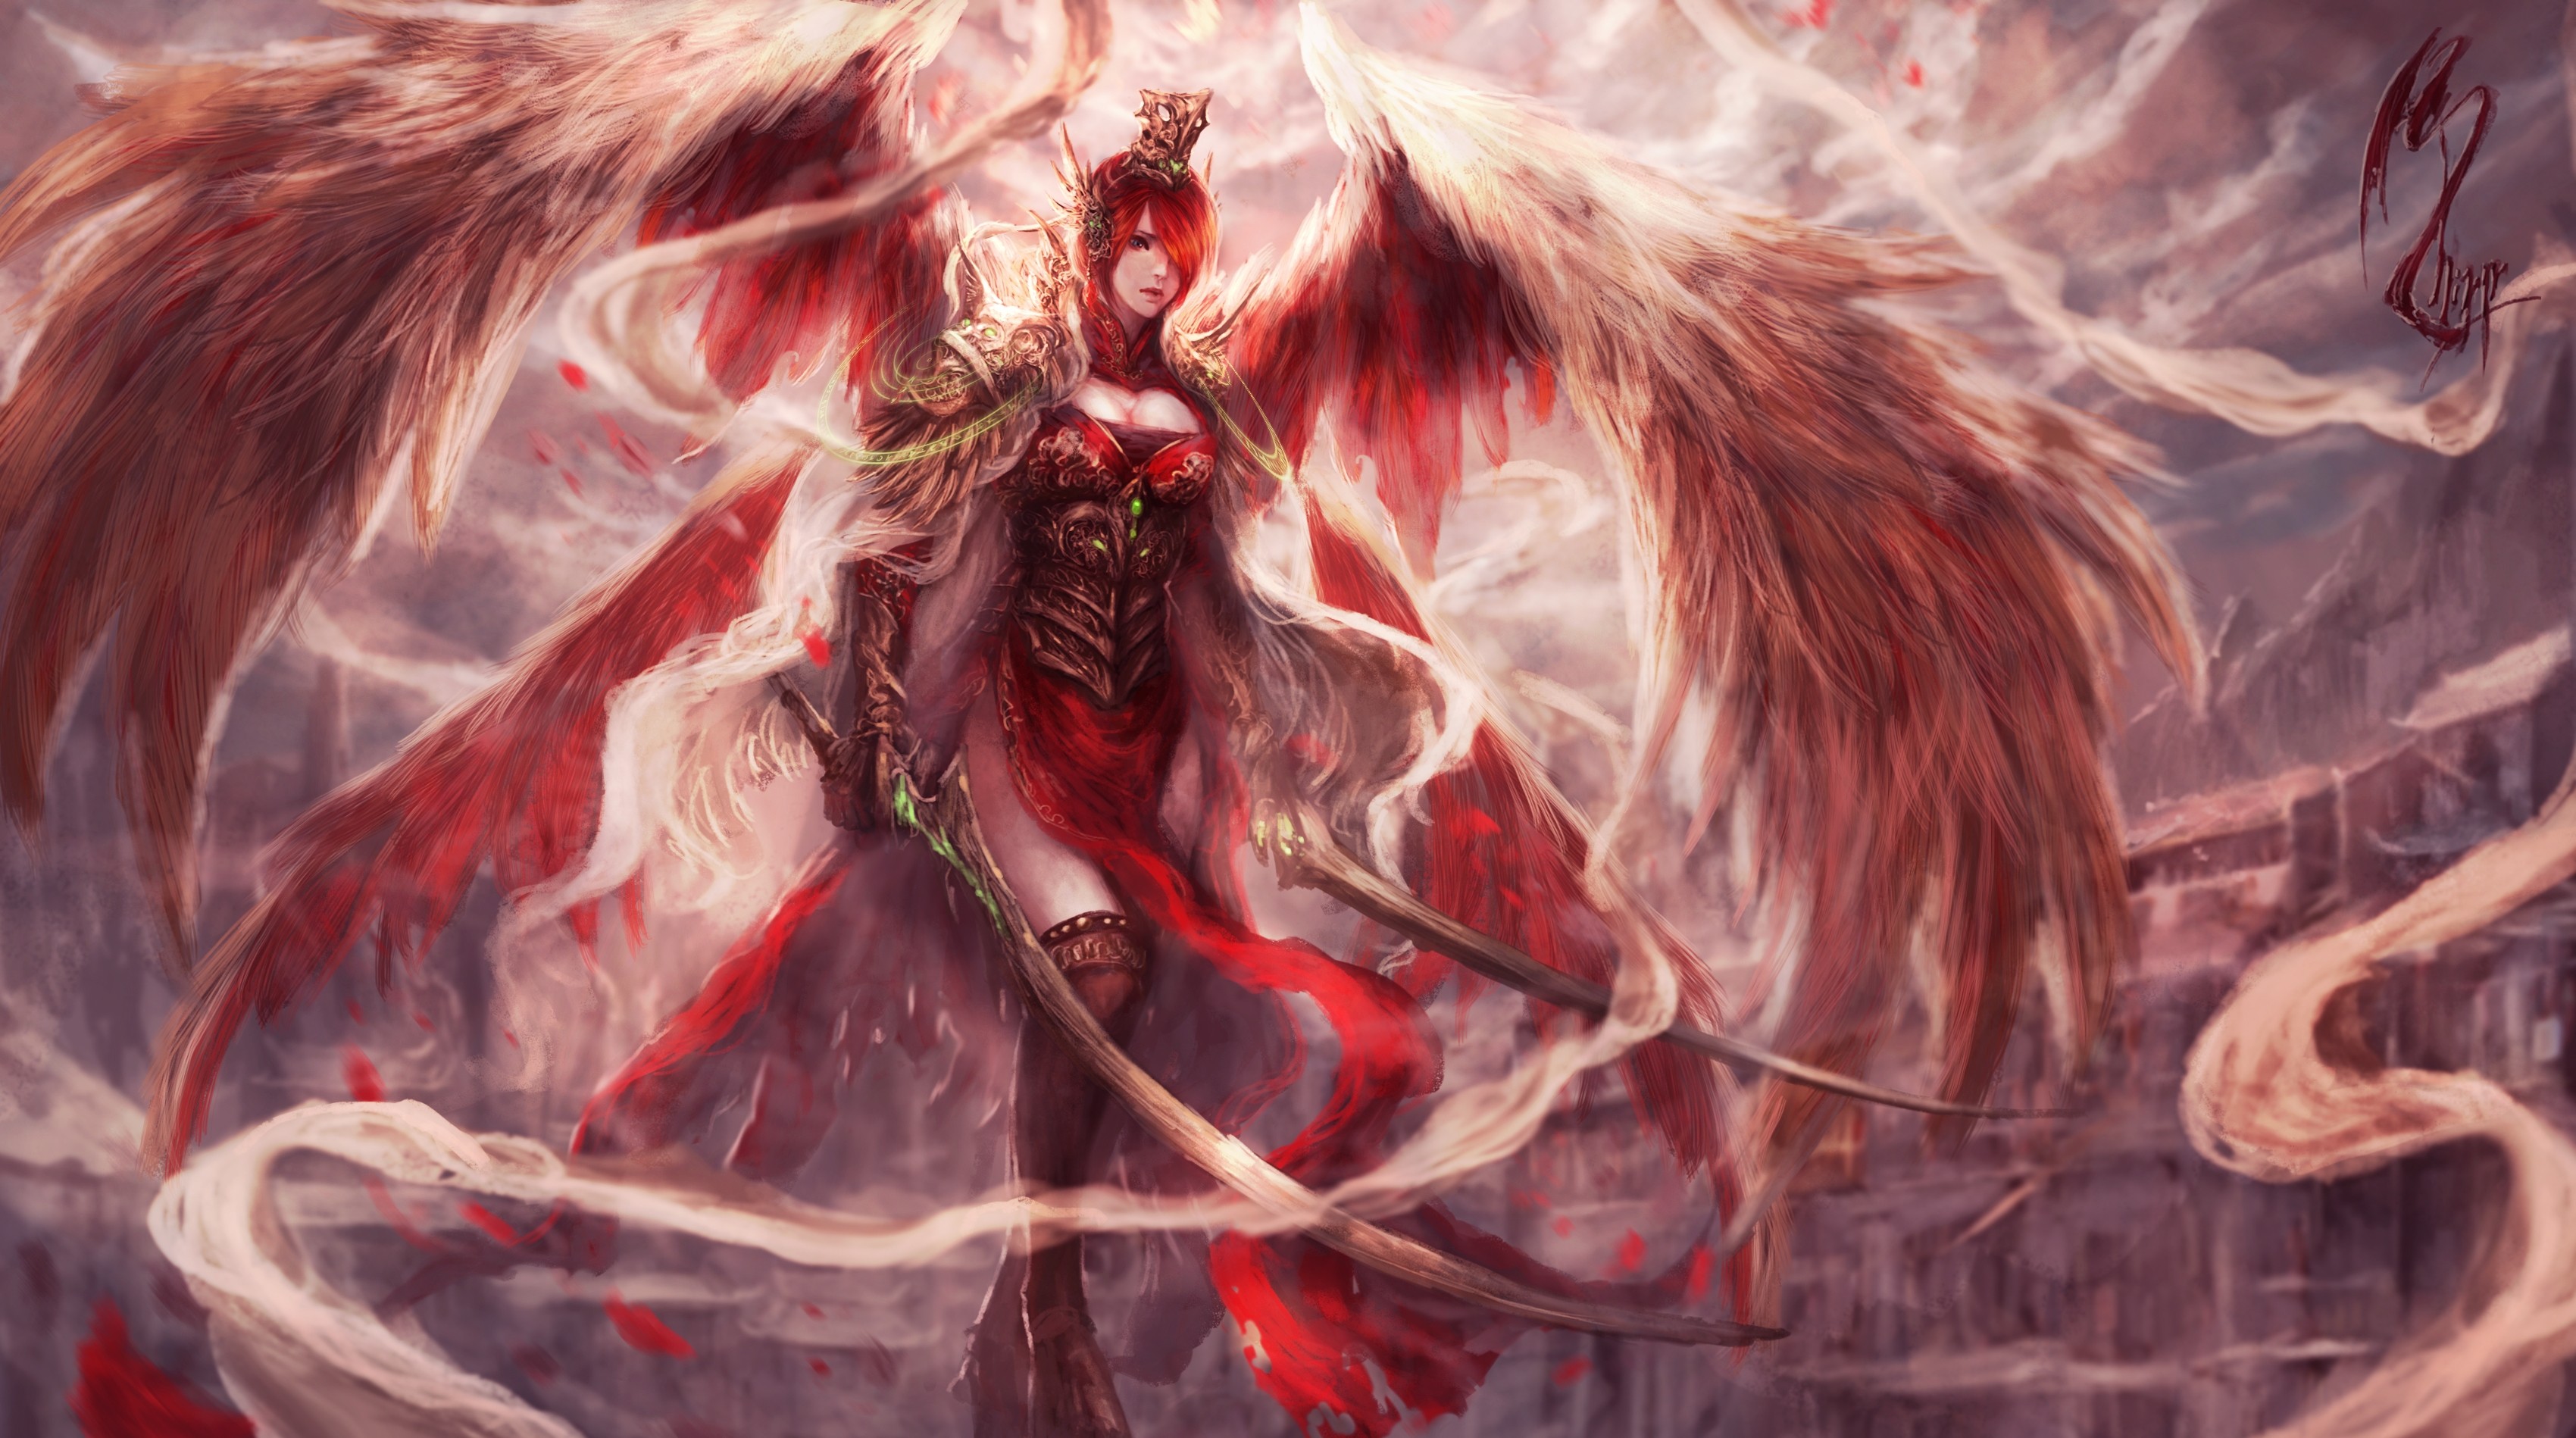 General 3400x1898 fantasy art sword wings fantasy girl redhead weapon women with swords